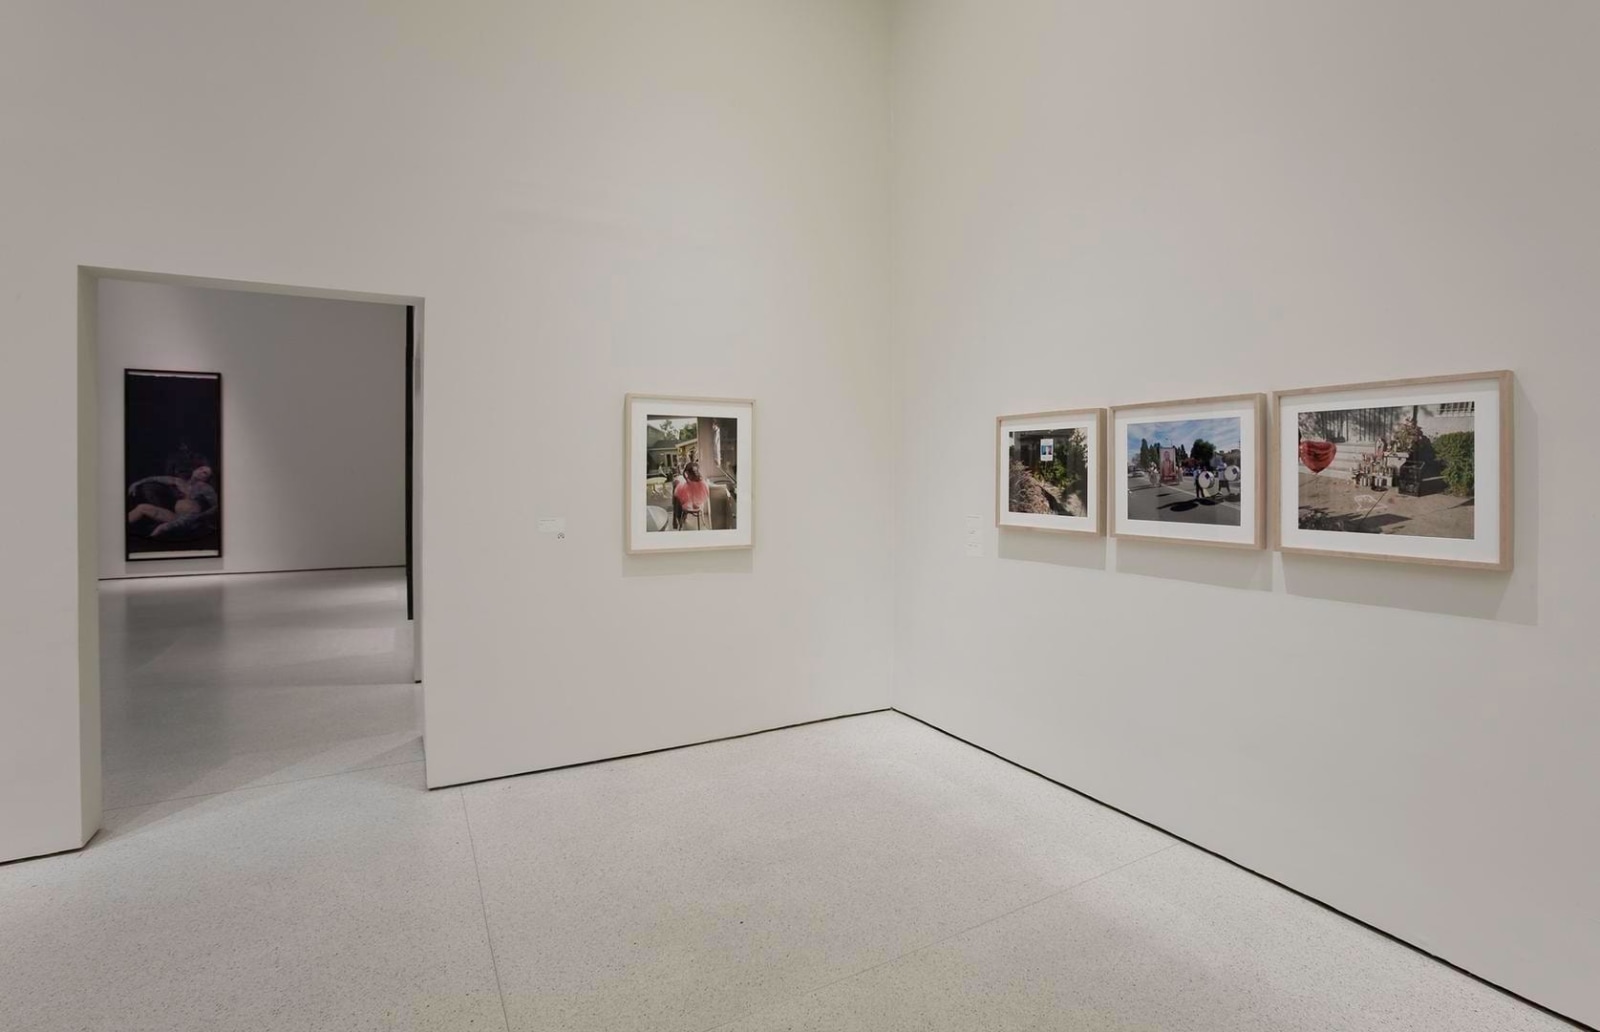  Installation view of&nbsp;Catherine Opie: American Photographer&nbsp;at the Solomon R. Guggenheim Museum, New York